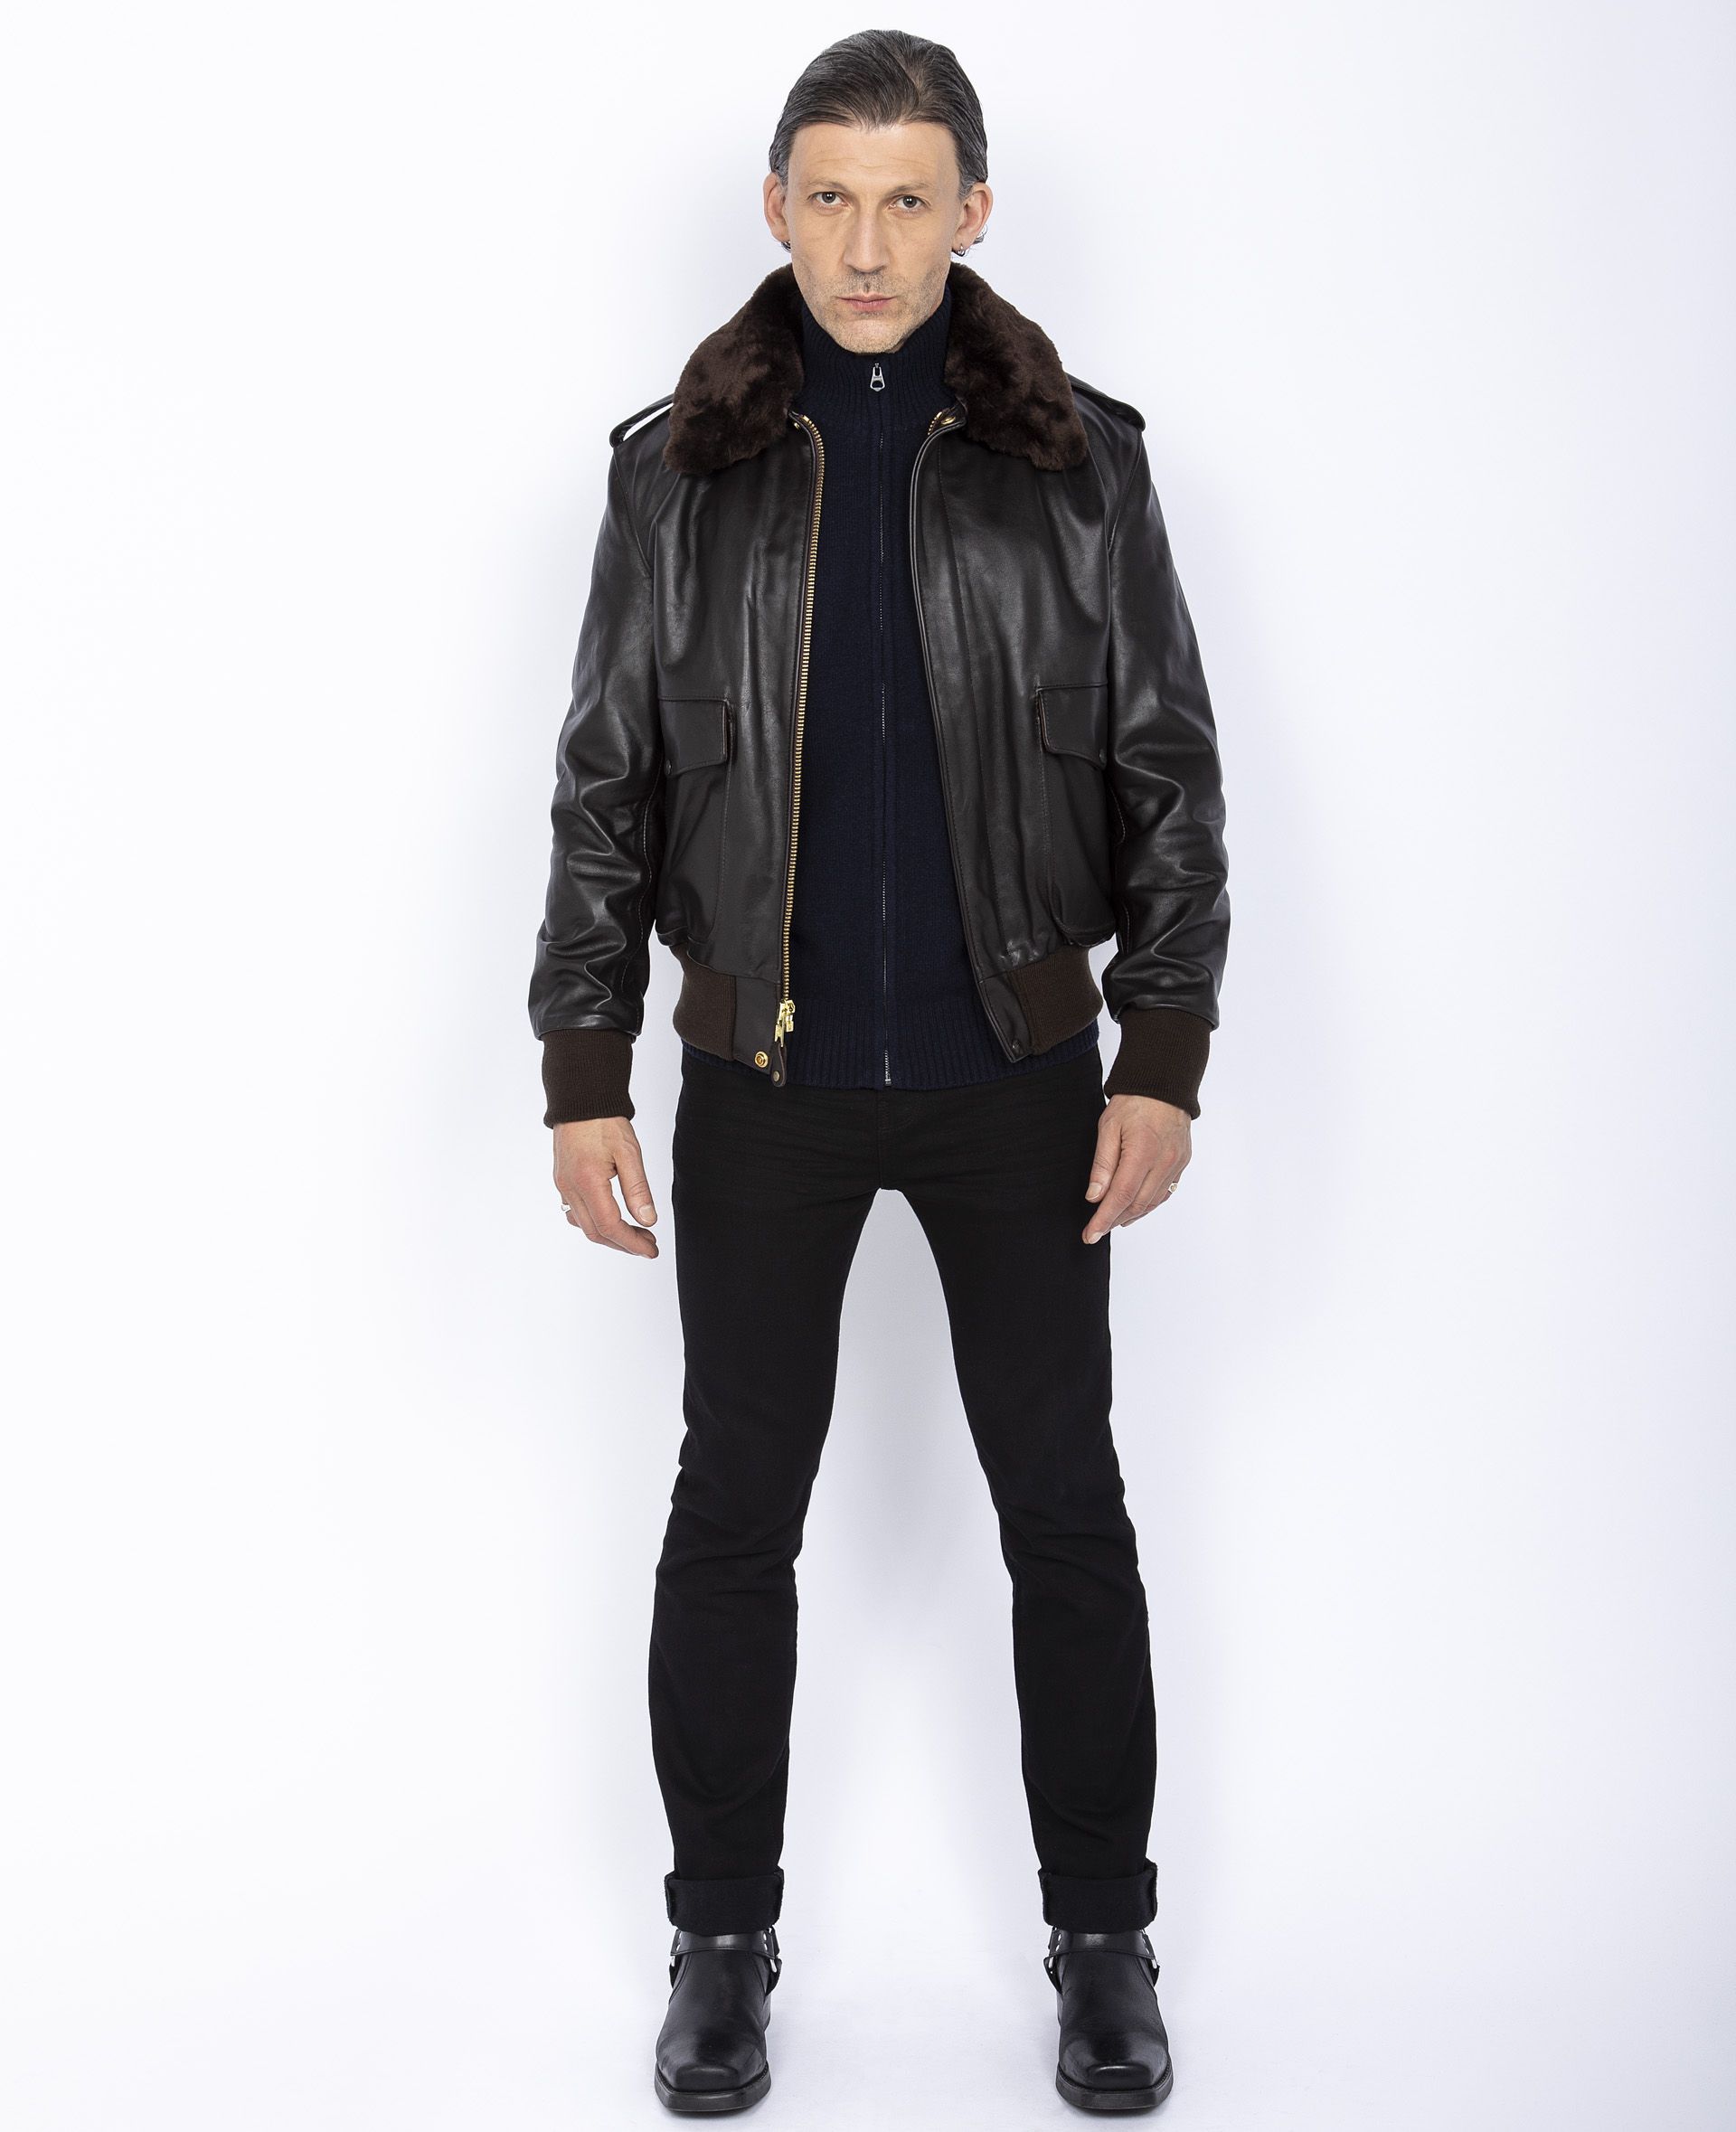 Schott leather jackets for men